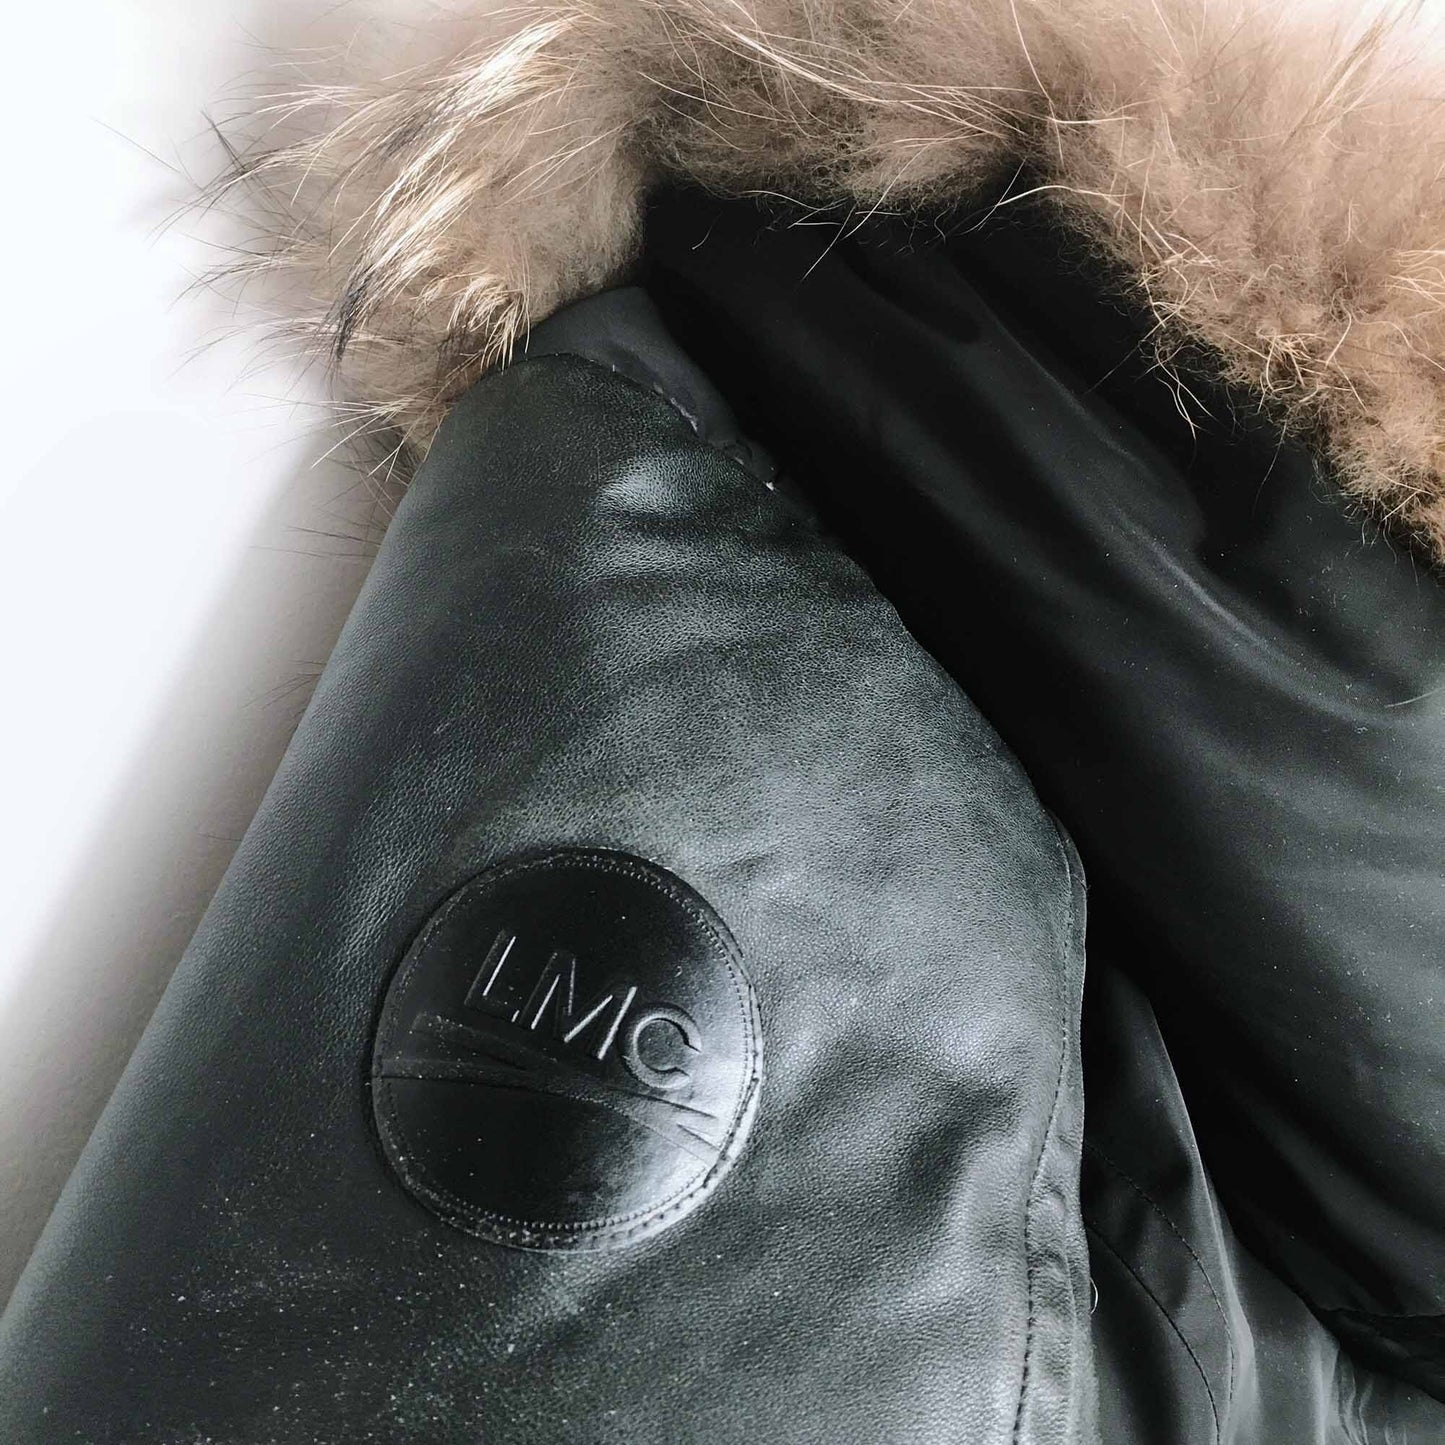 rudsak-style leather sleeve down parka with fur - size medium